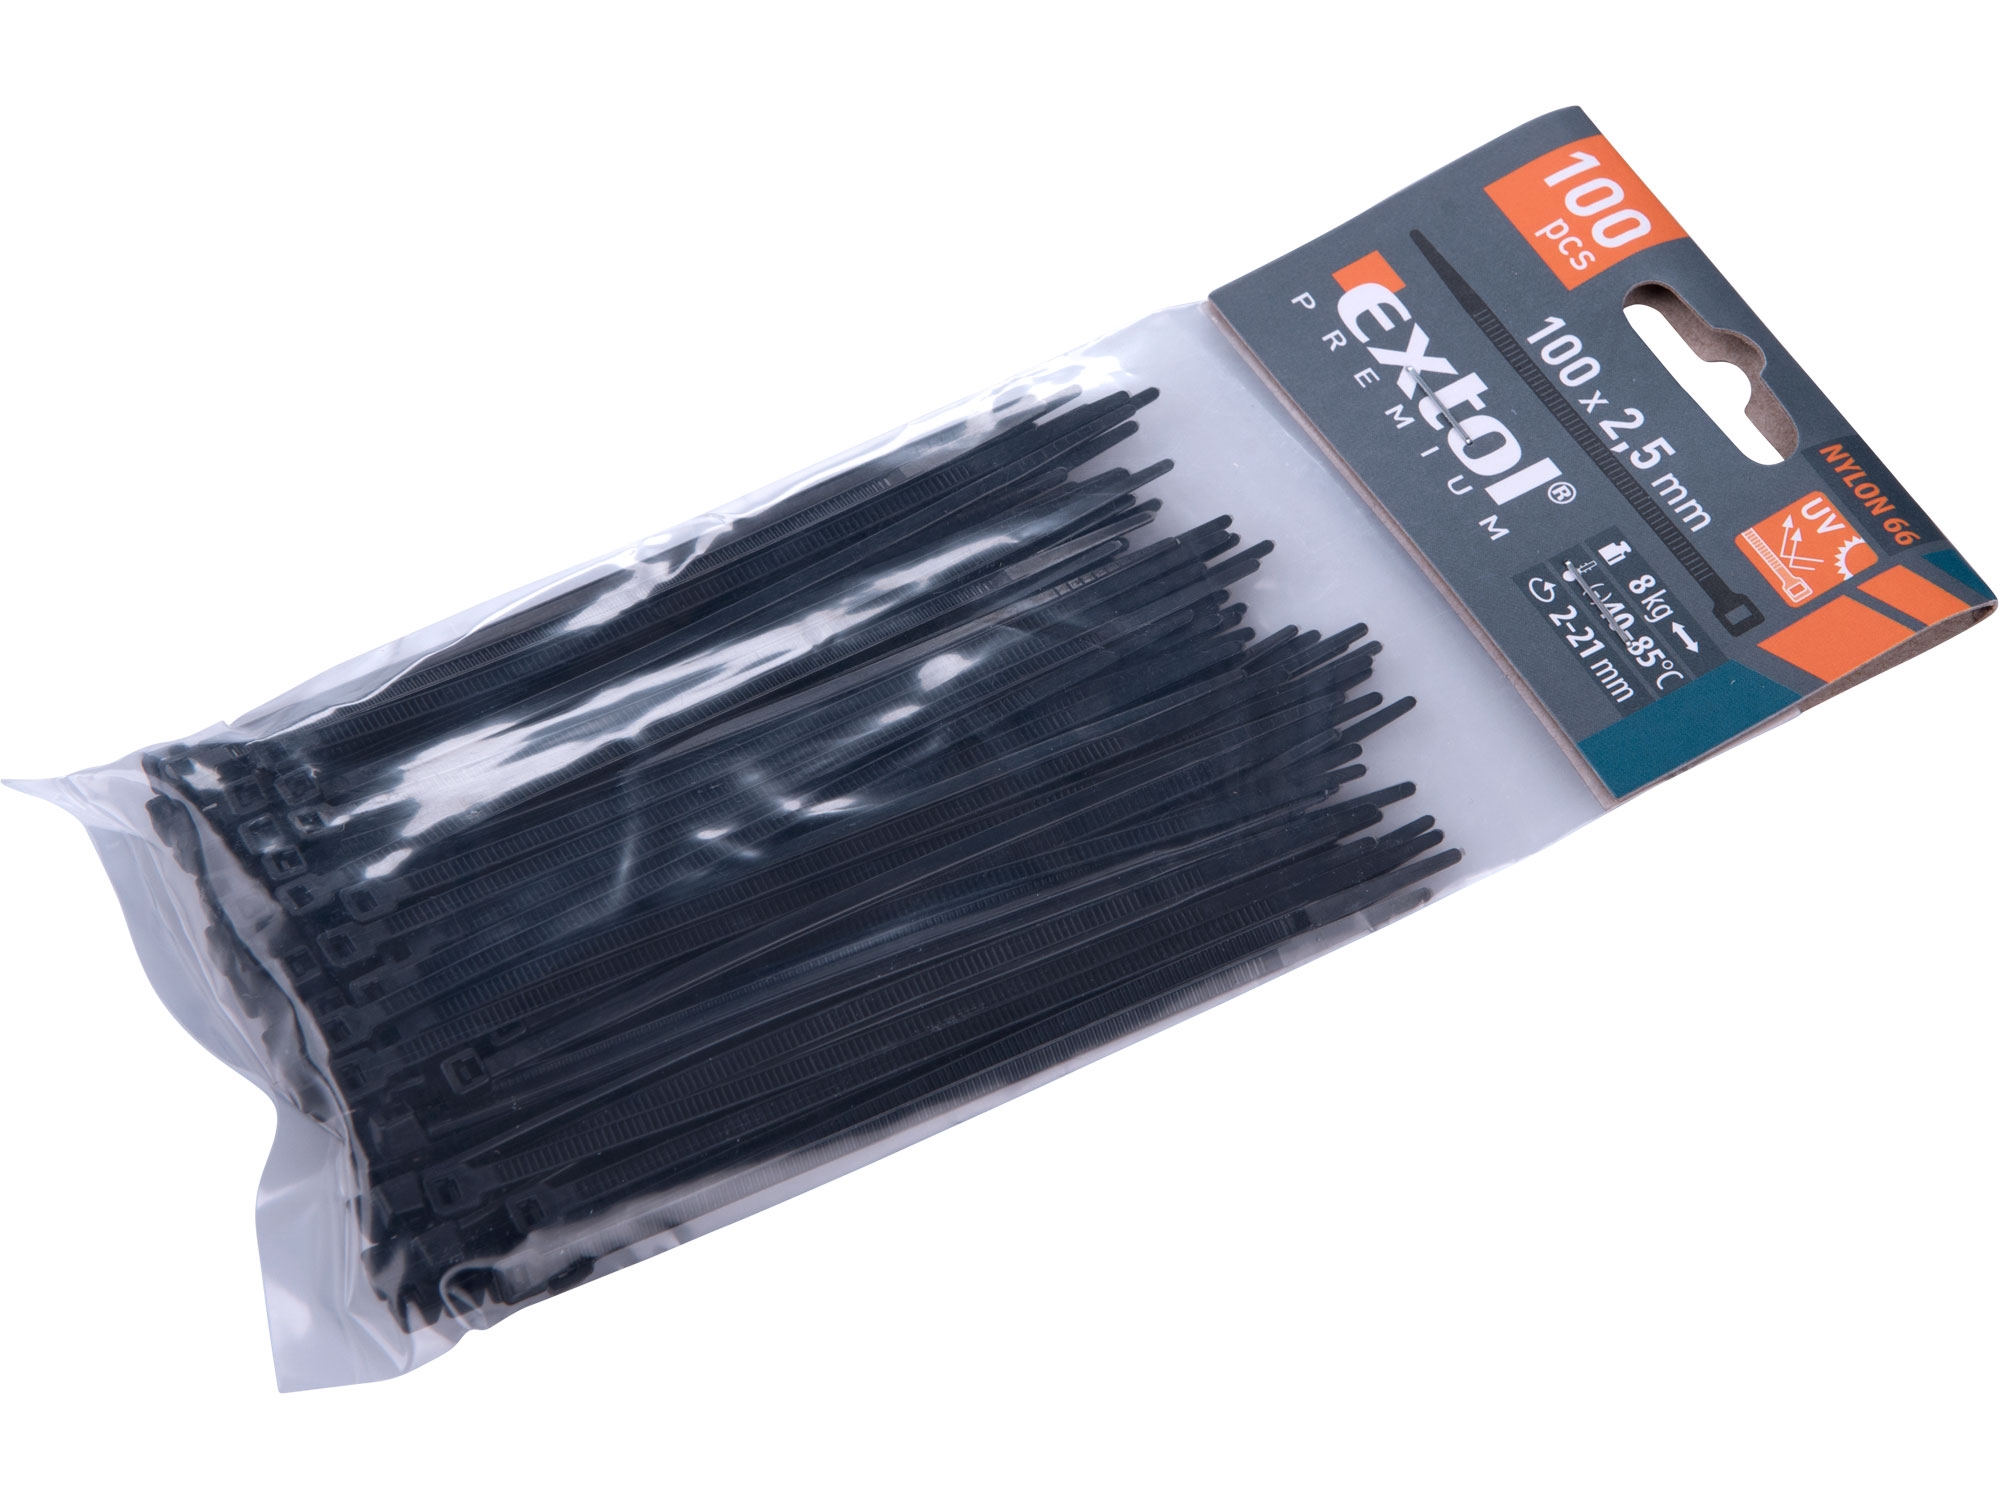 pásky stahovací černé, 100x2,5mm, 100ks, nylon, EXTOL PREMIUM 8856152